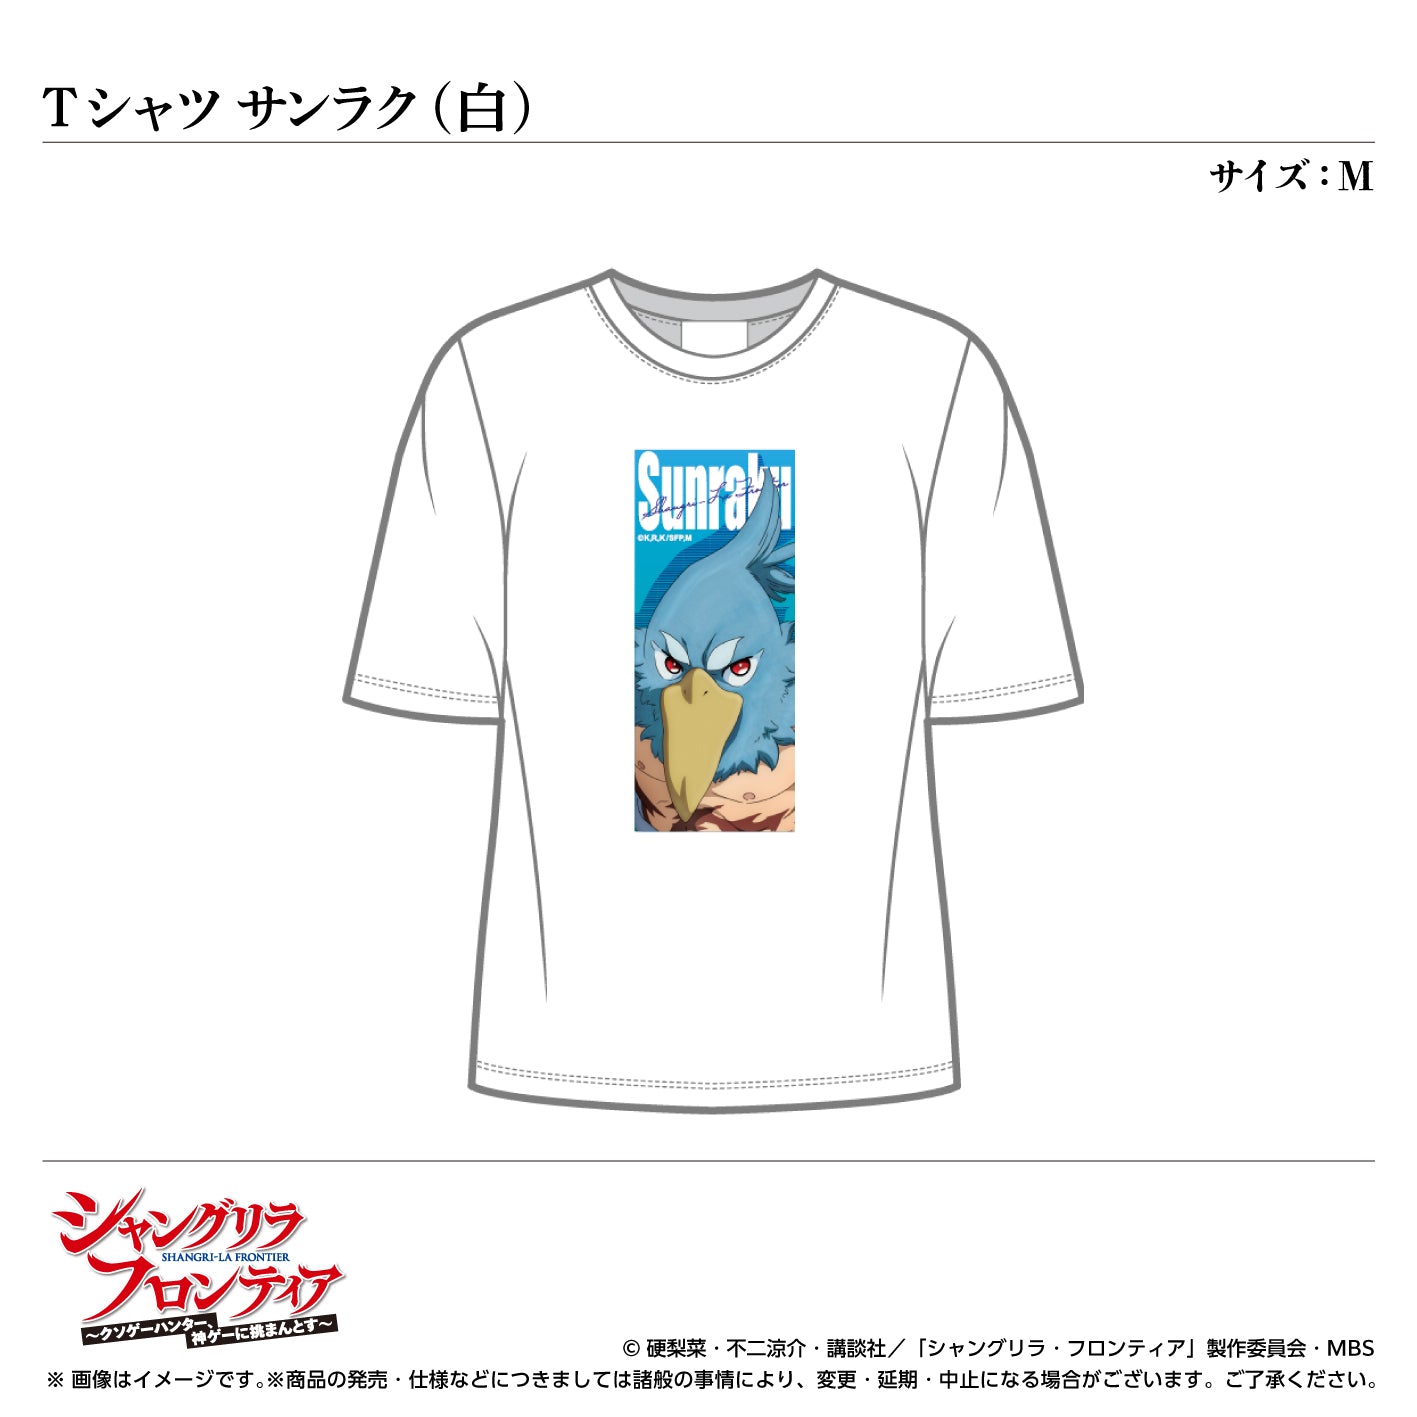 T -shirt / Sun Lak (white) size: M <TV anime "Shangri -La Frontier">